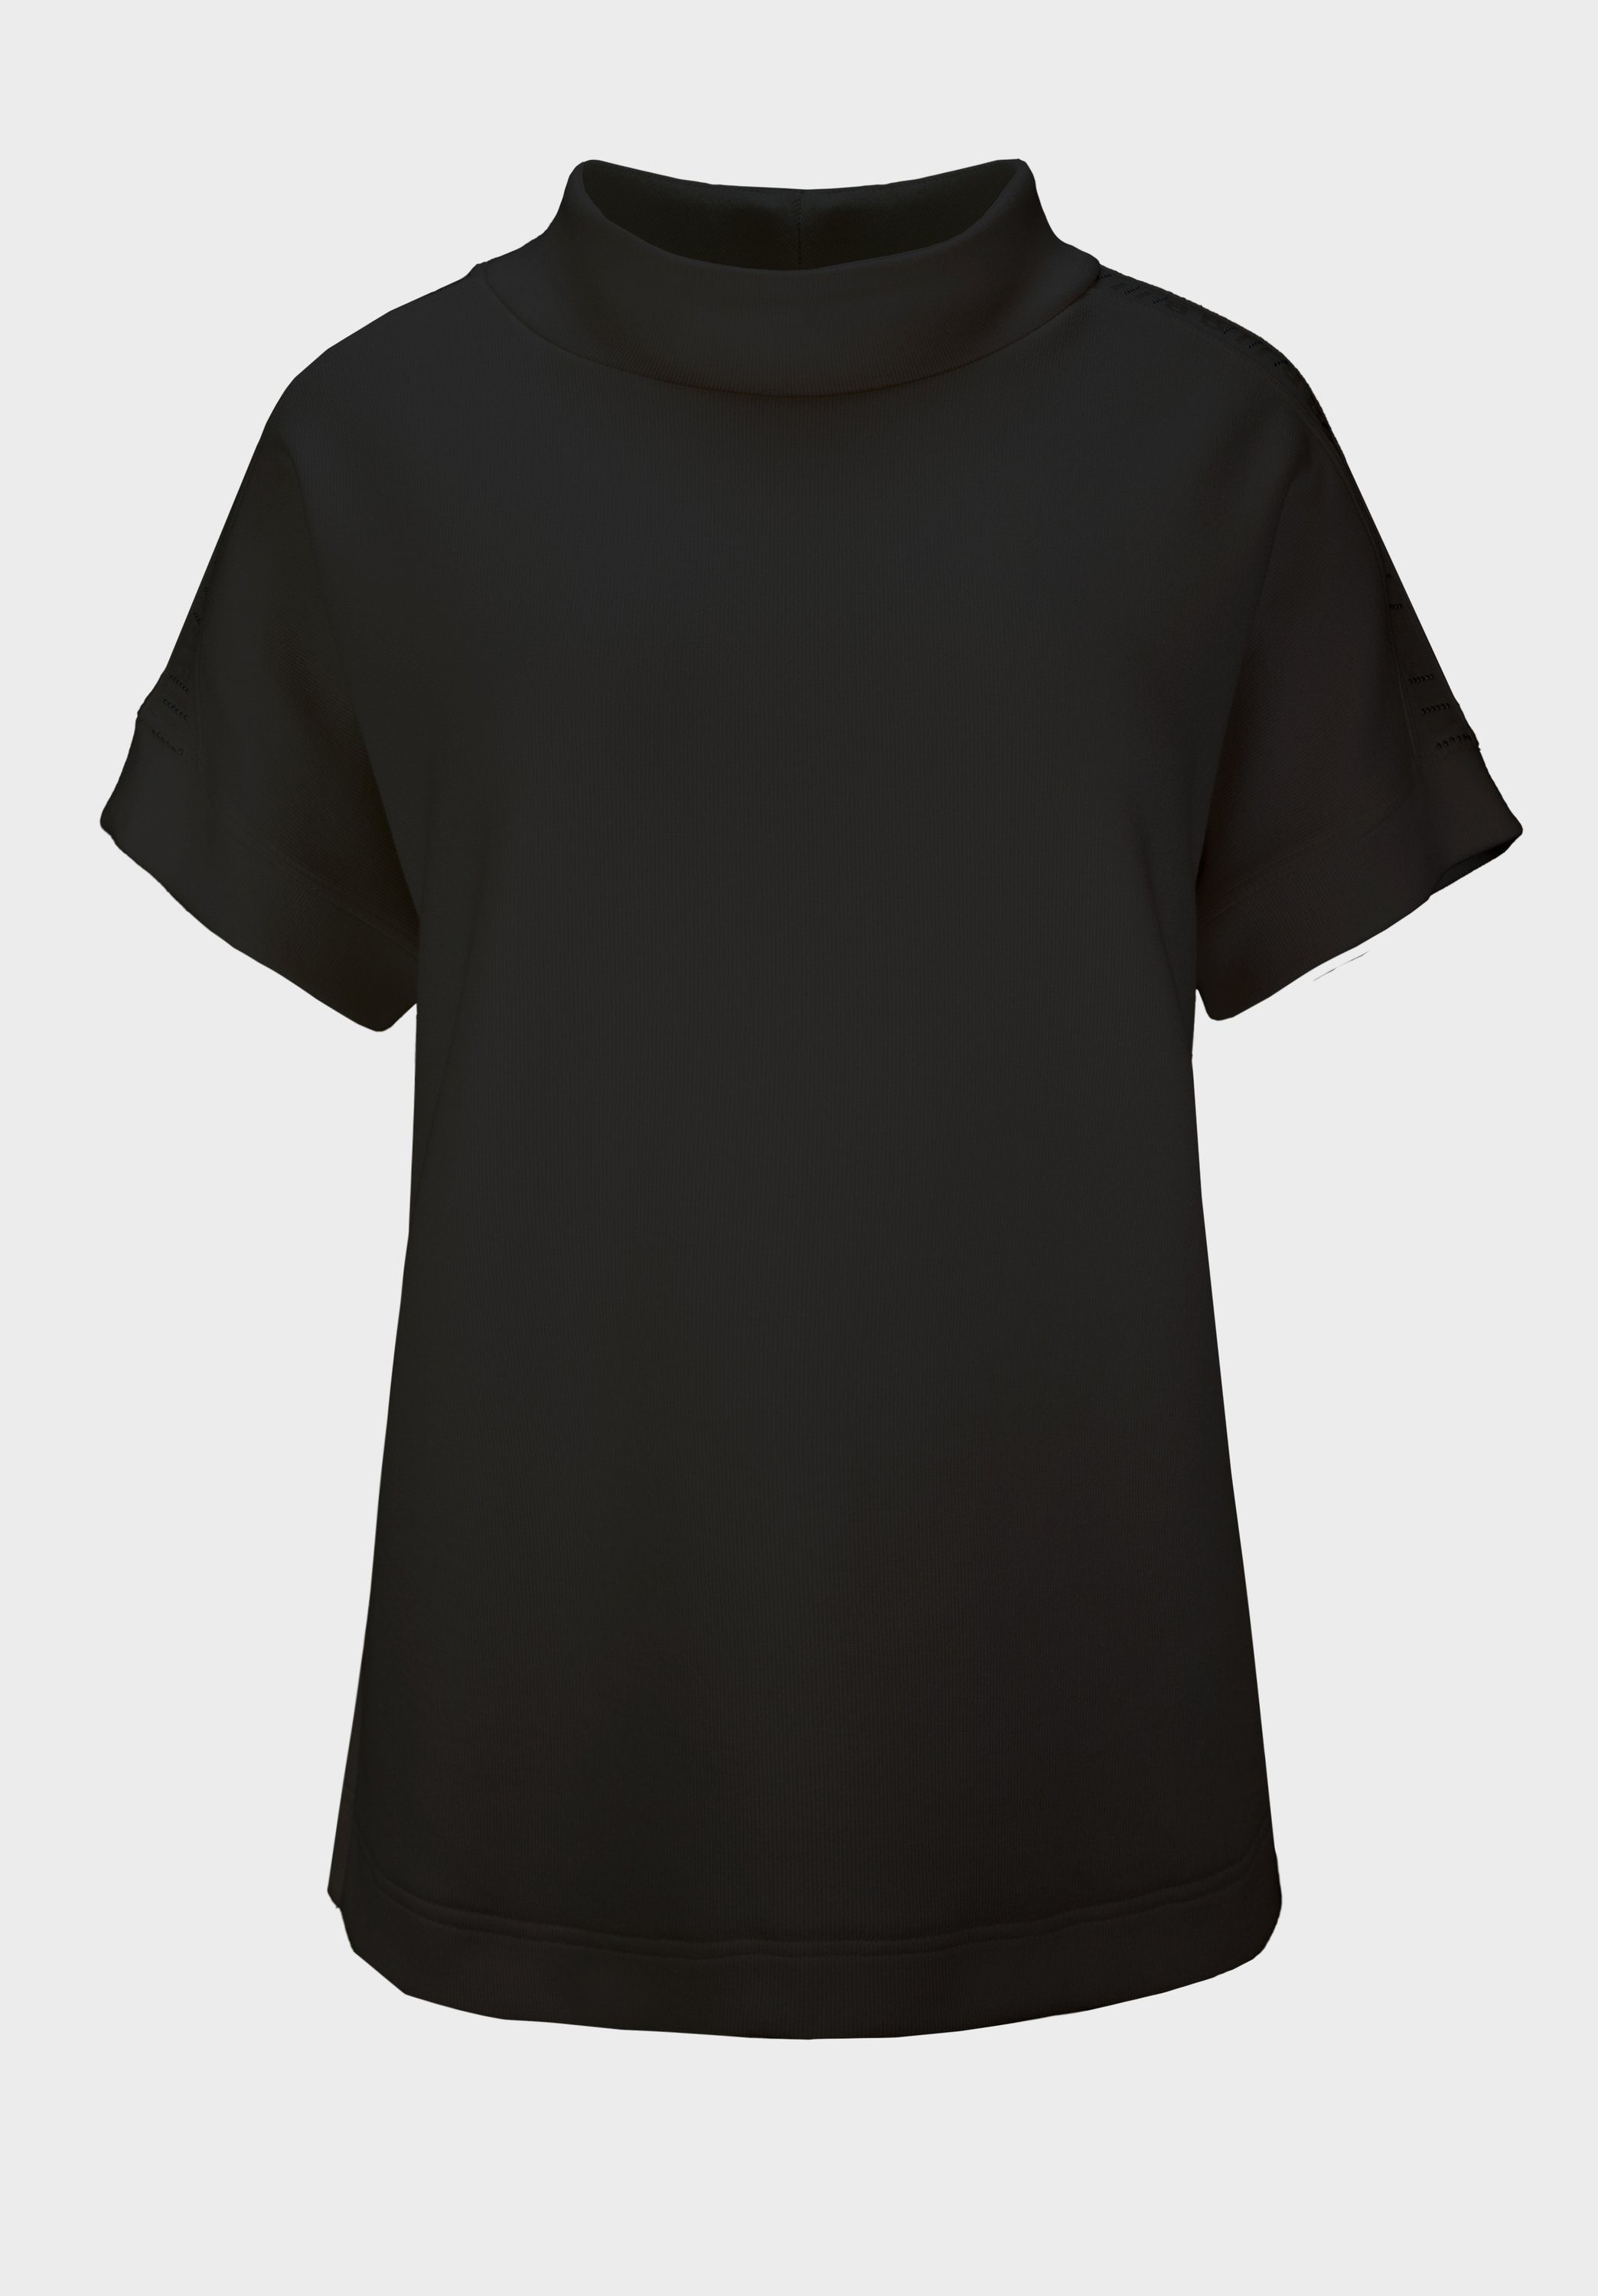 bianca Kurzarmshirt IDA mit Schulterdetails black aus Jersey-Qualität softer